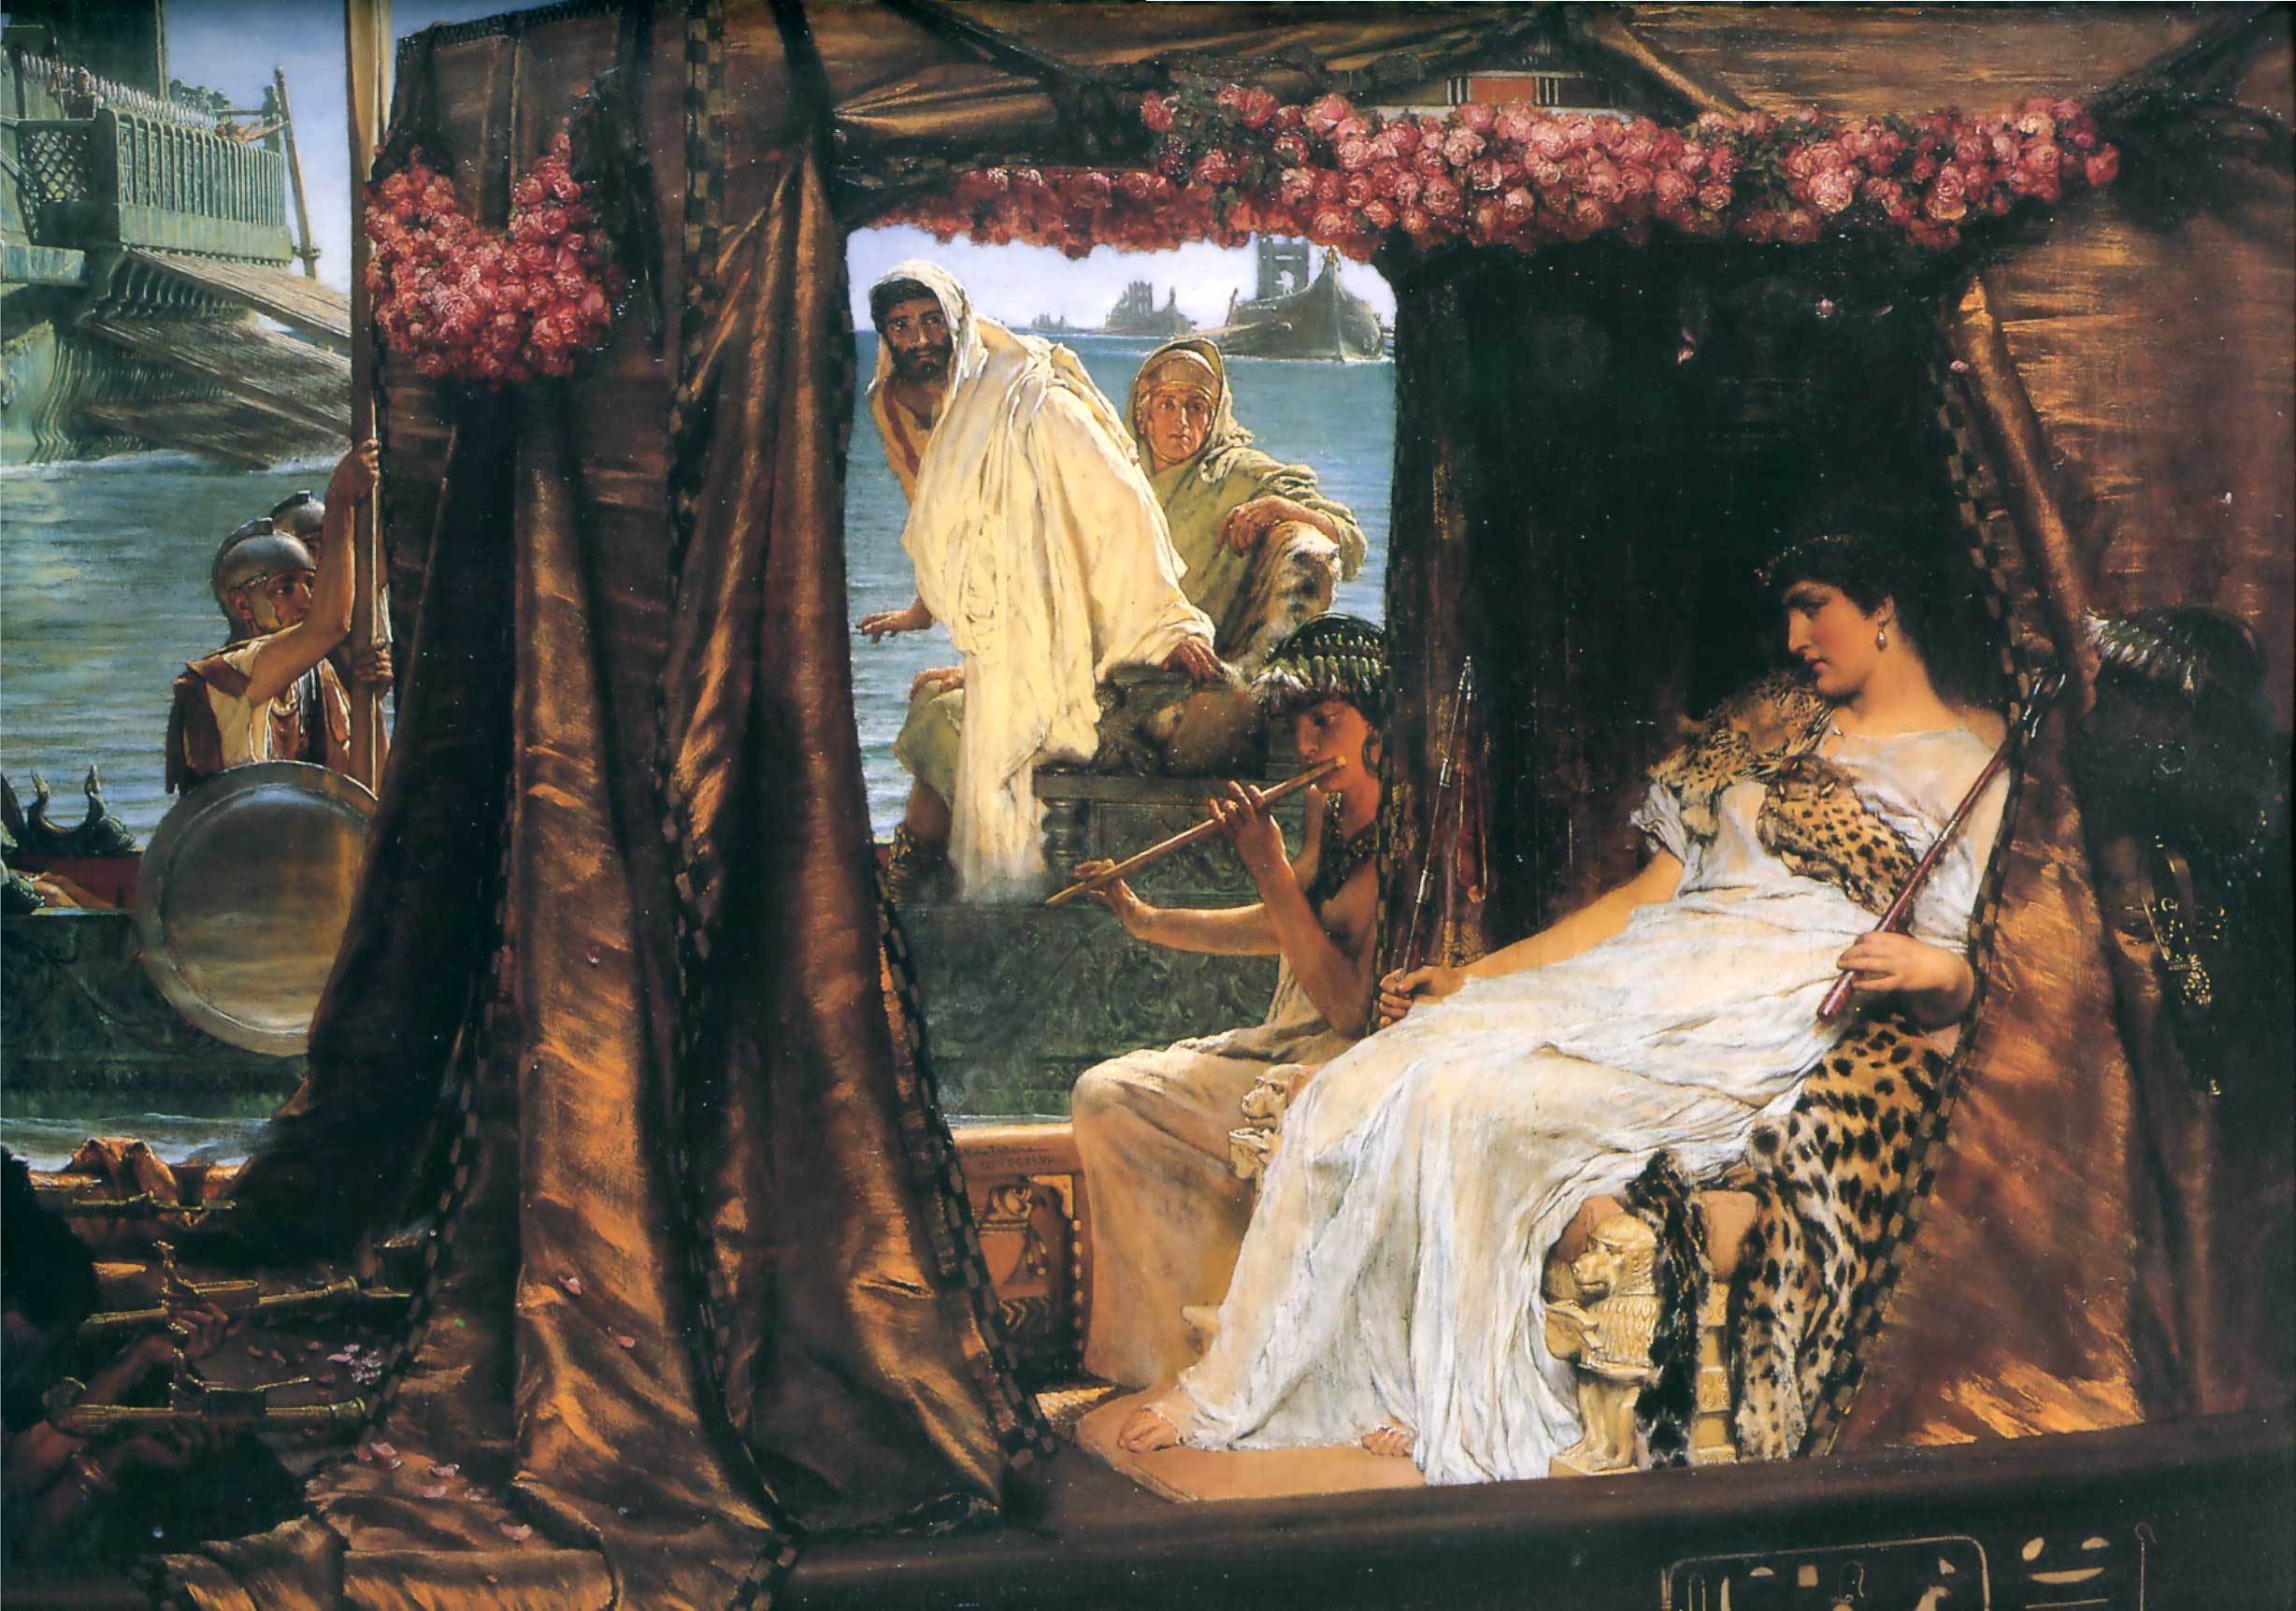 Antony und Cleopatra by Lawrence Alma-Tadema - 1885 - 65.5 × 92 cm Private Sammlung